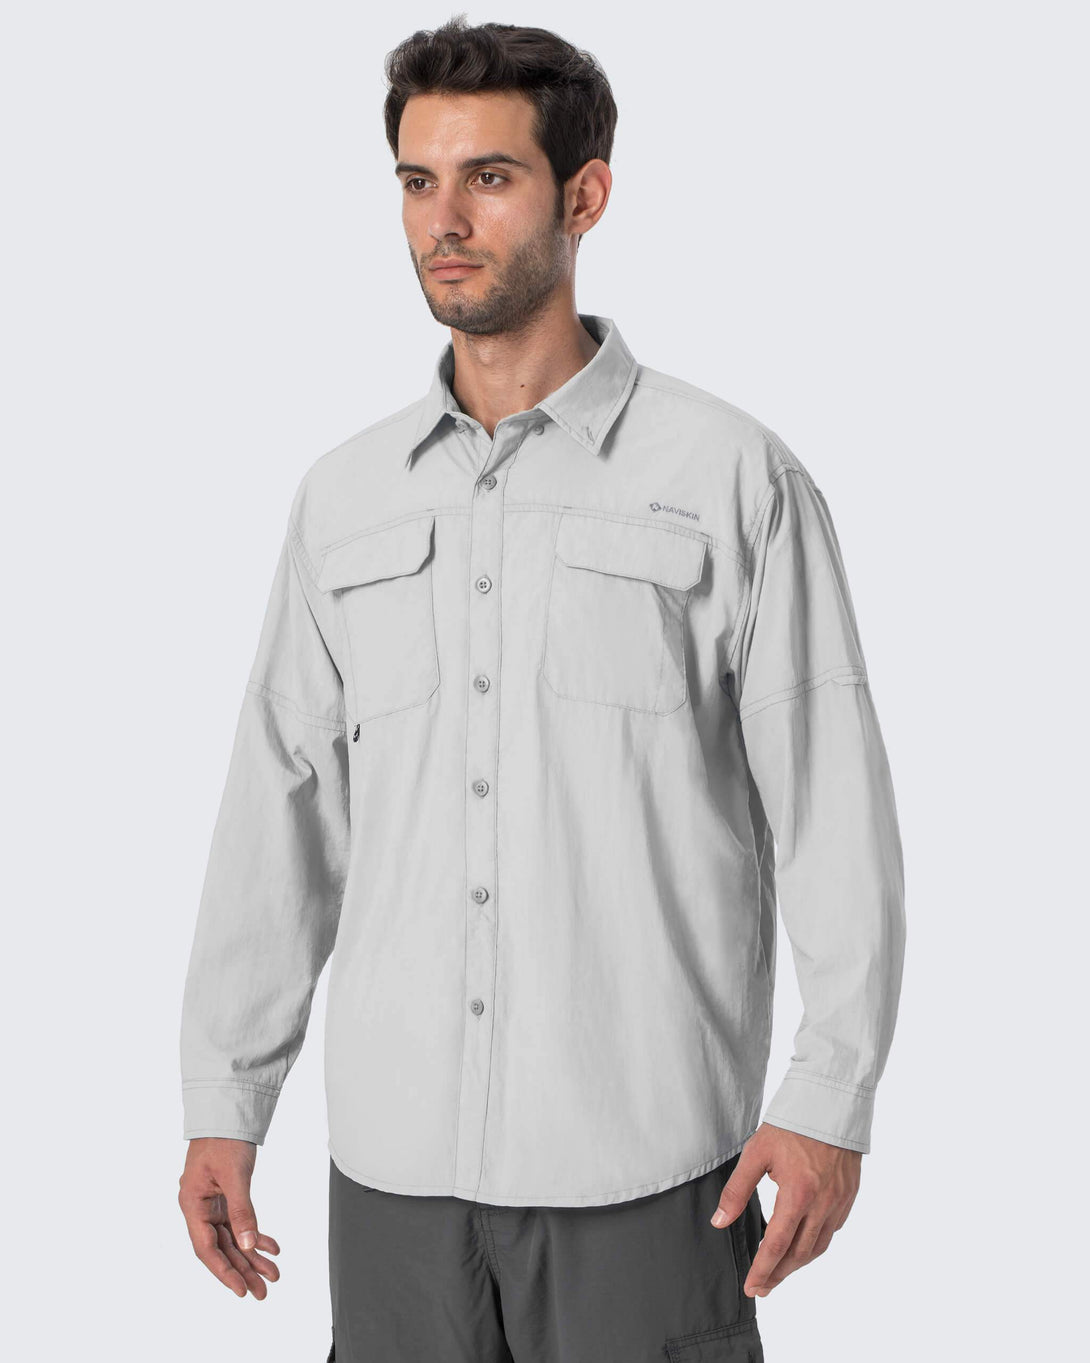 NAVISKIN Men's UPF 50+ Sun Protection Clothing Hiking Fishing Shirt Lightweight Quick Dry SPF Outdoor Long Sleeve Shirt, Grey / Medium